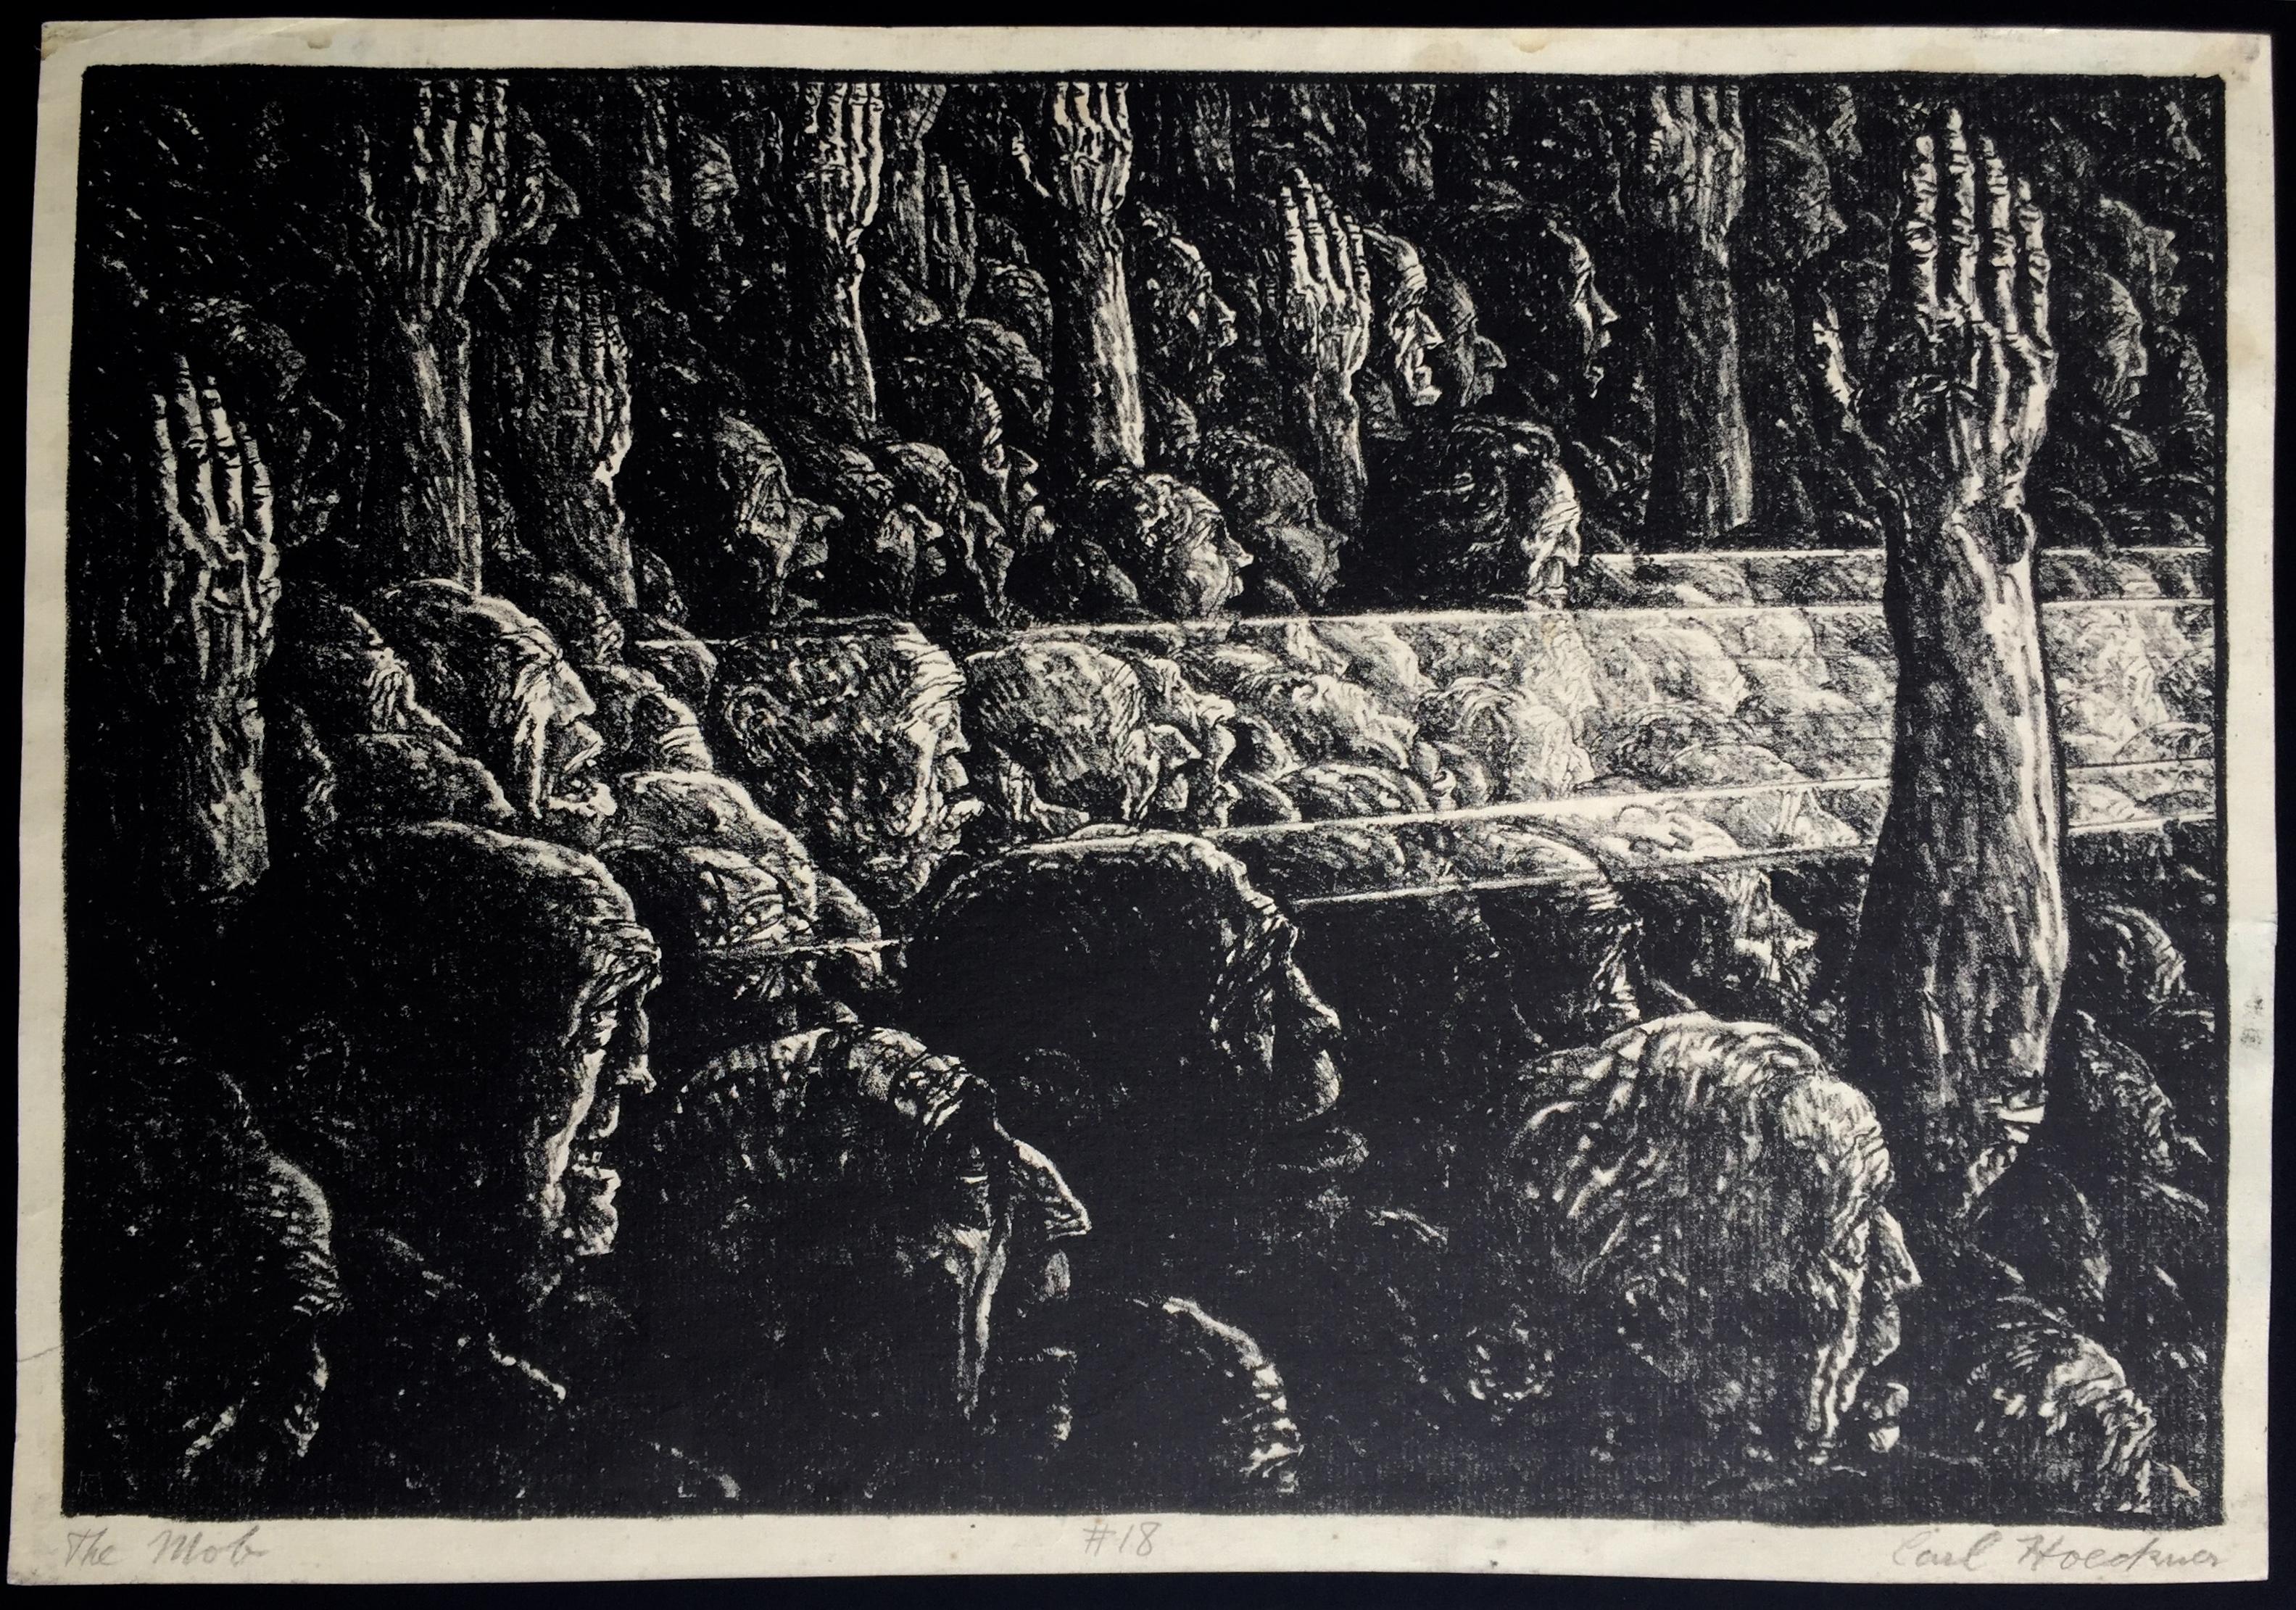 THE MOB - Print by Carl Hoeckner